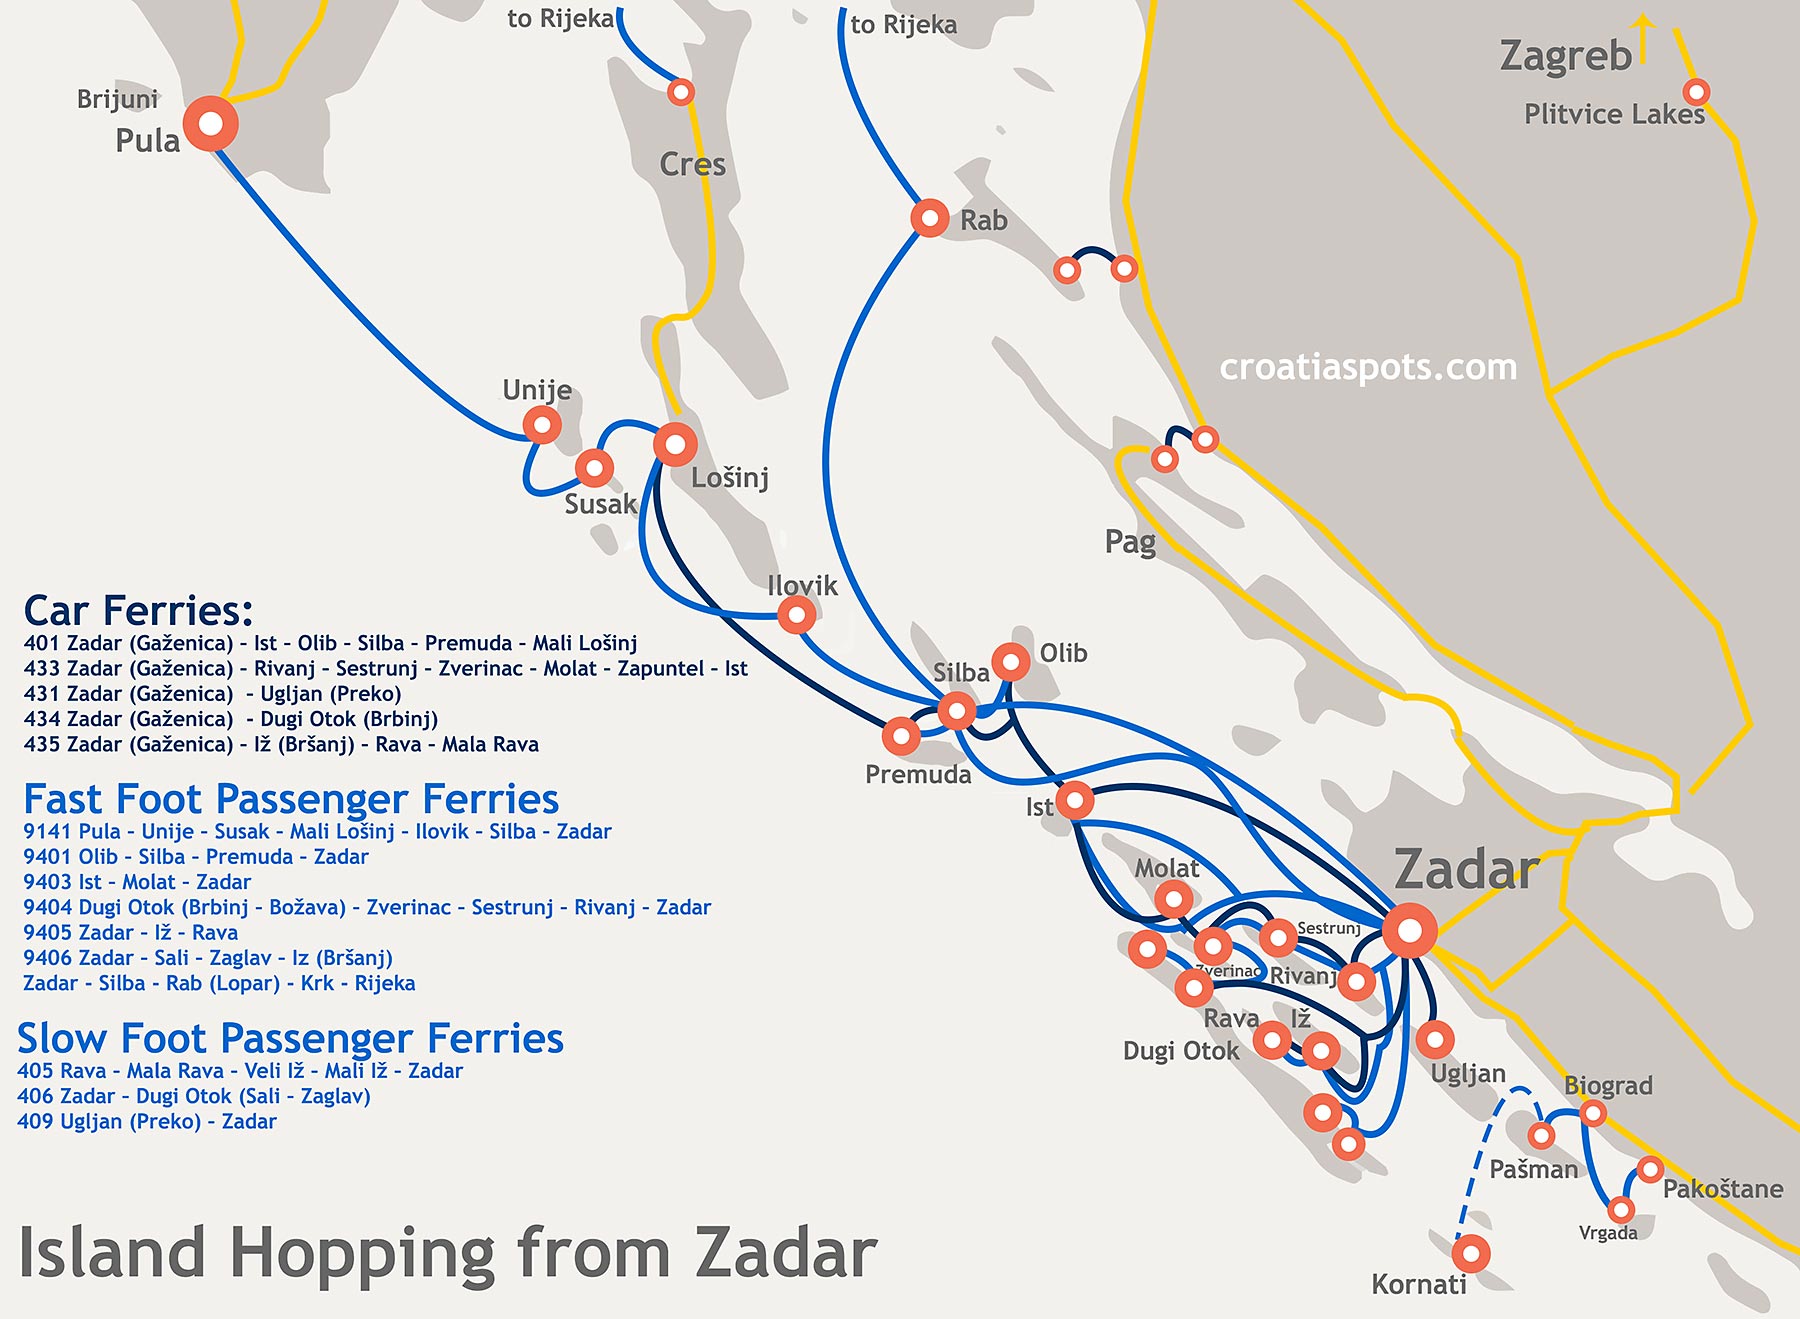 Map of island hopping from Zadar, Croatia